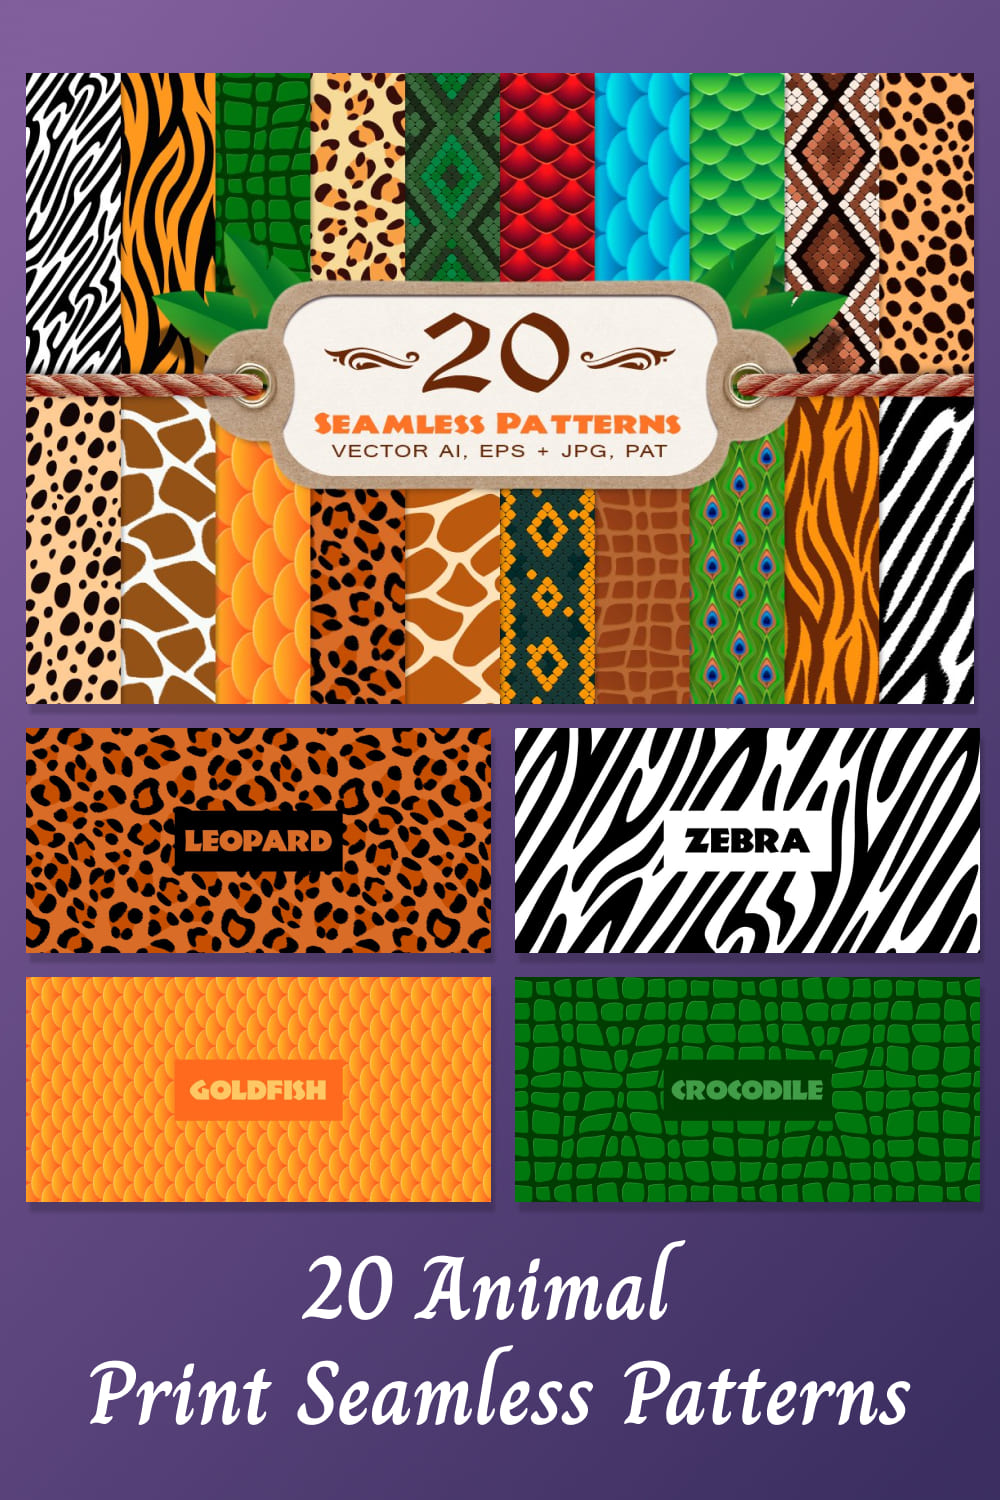 20 Animal Print Seamless Patterns 04.